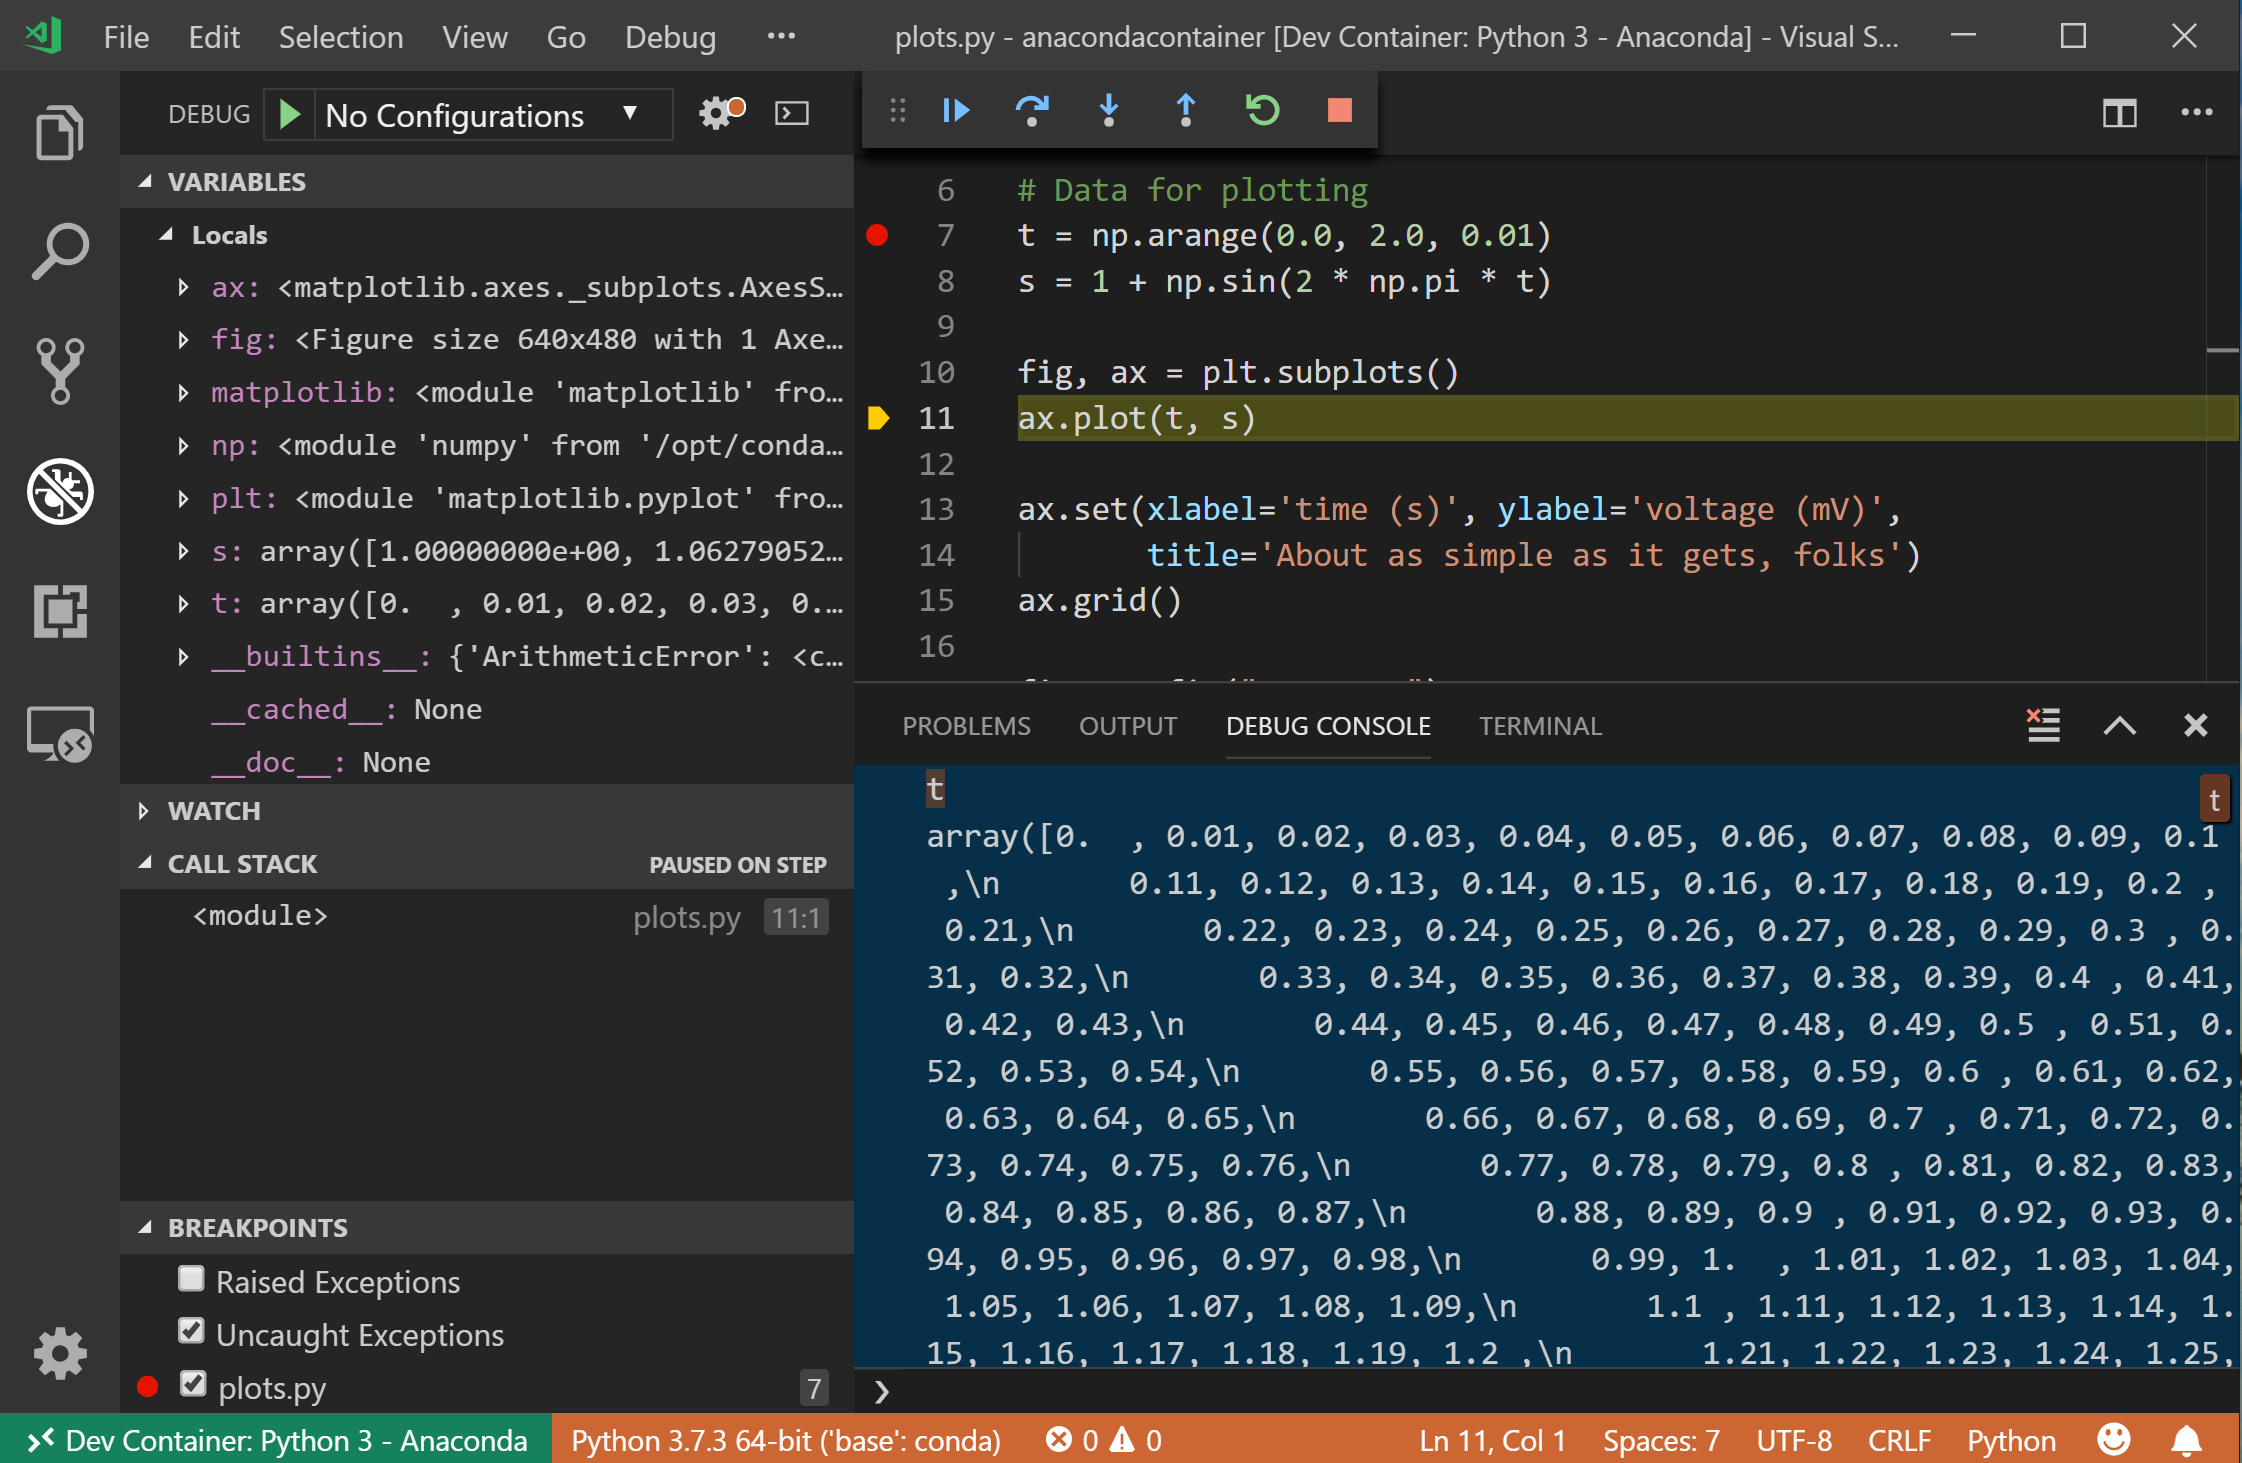 visual studio 2015 needs python script debugger